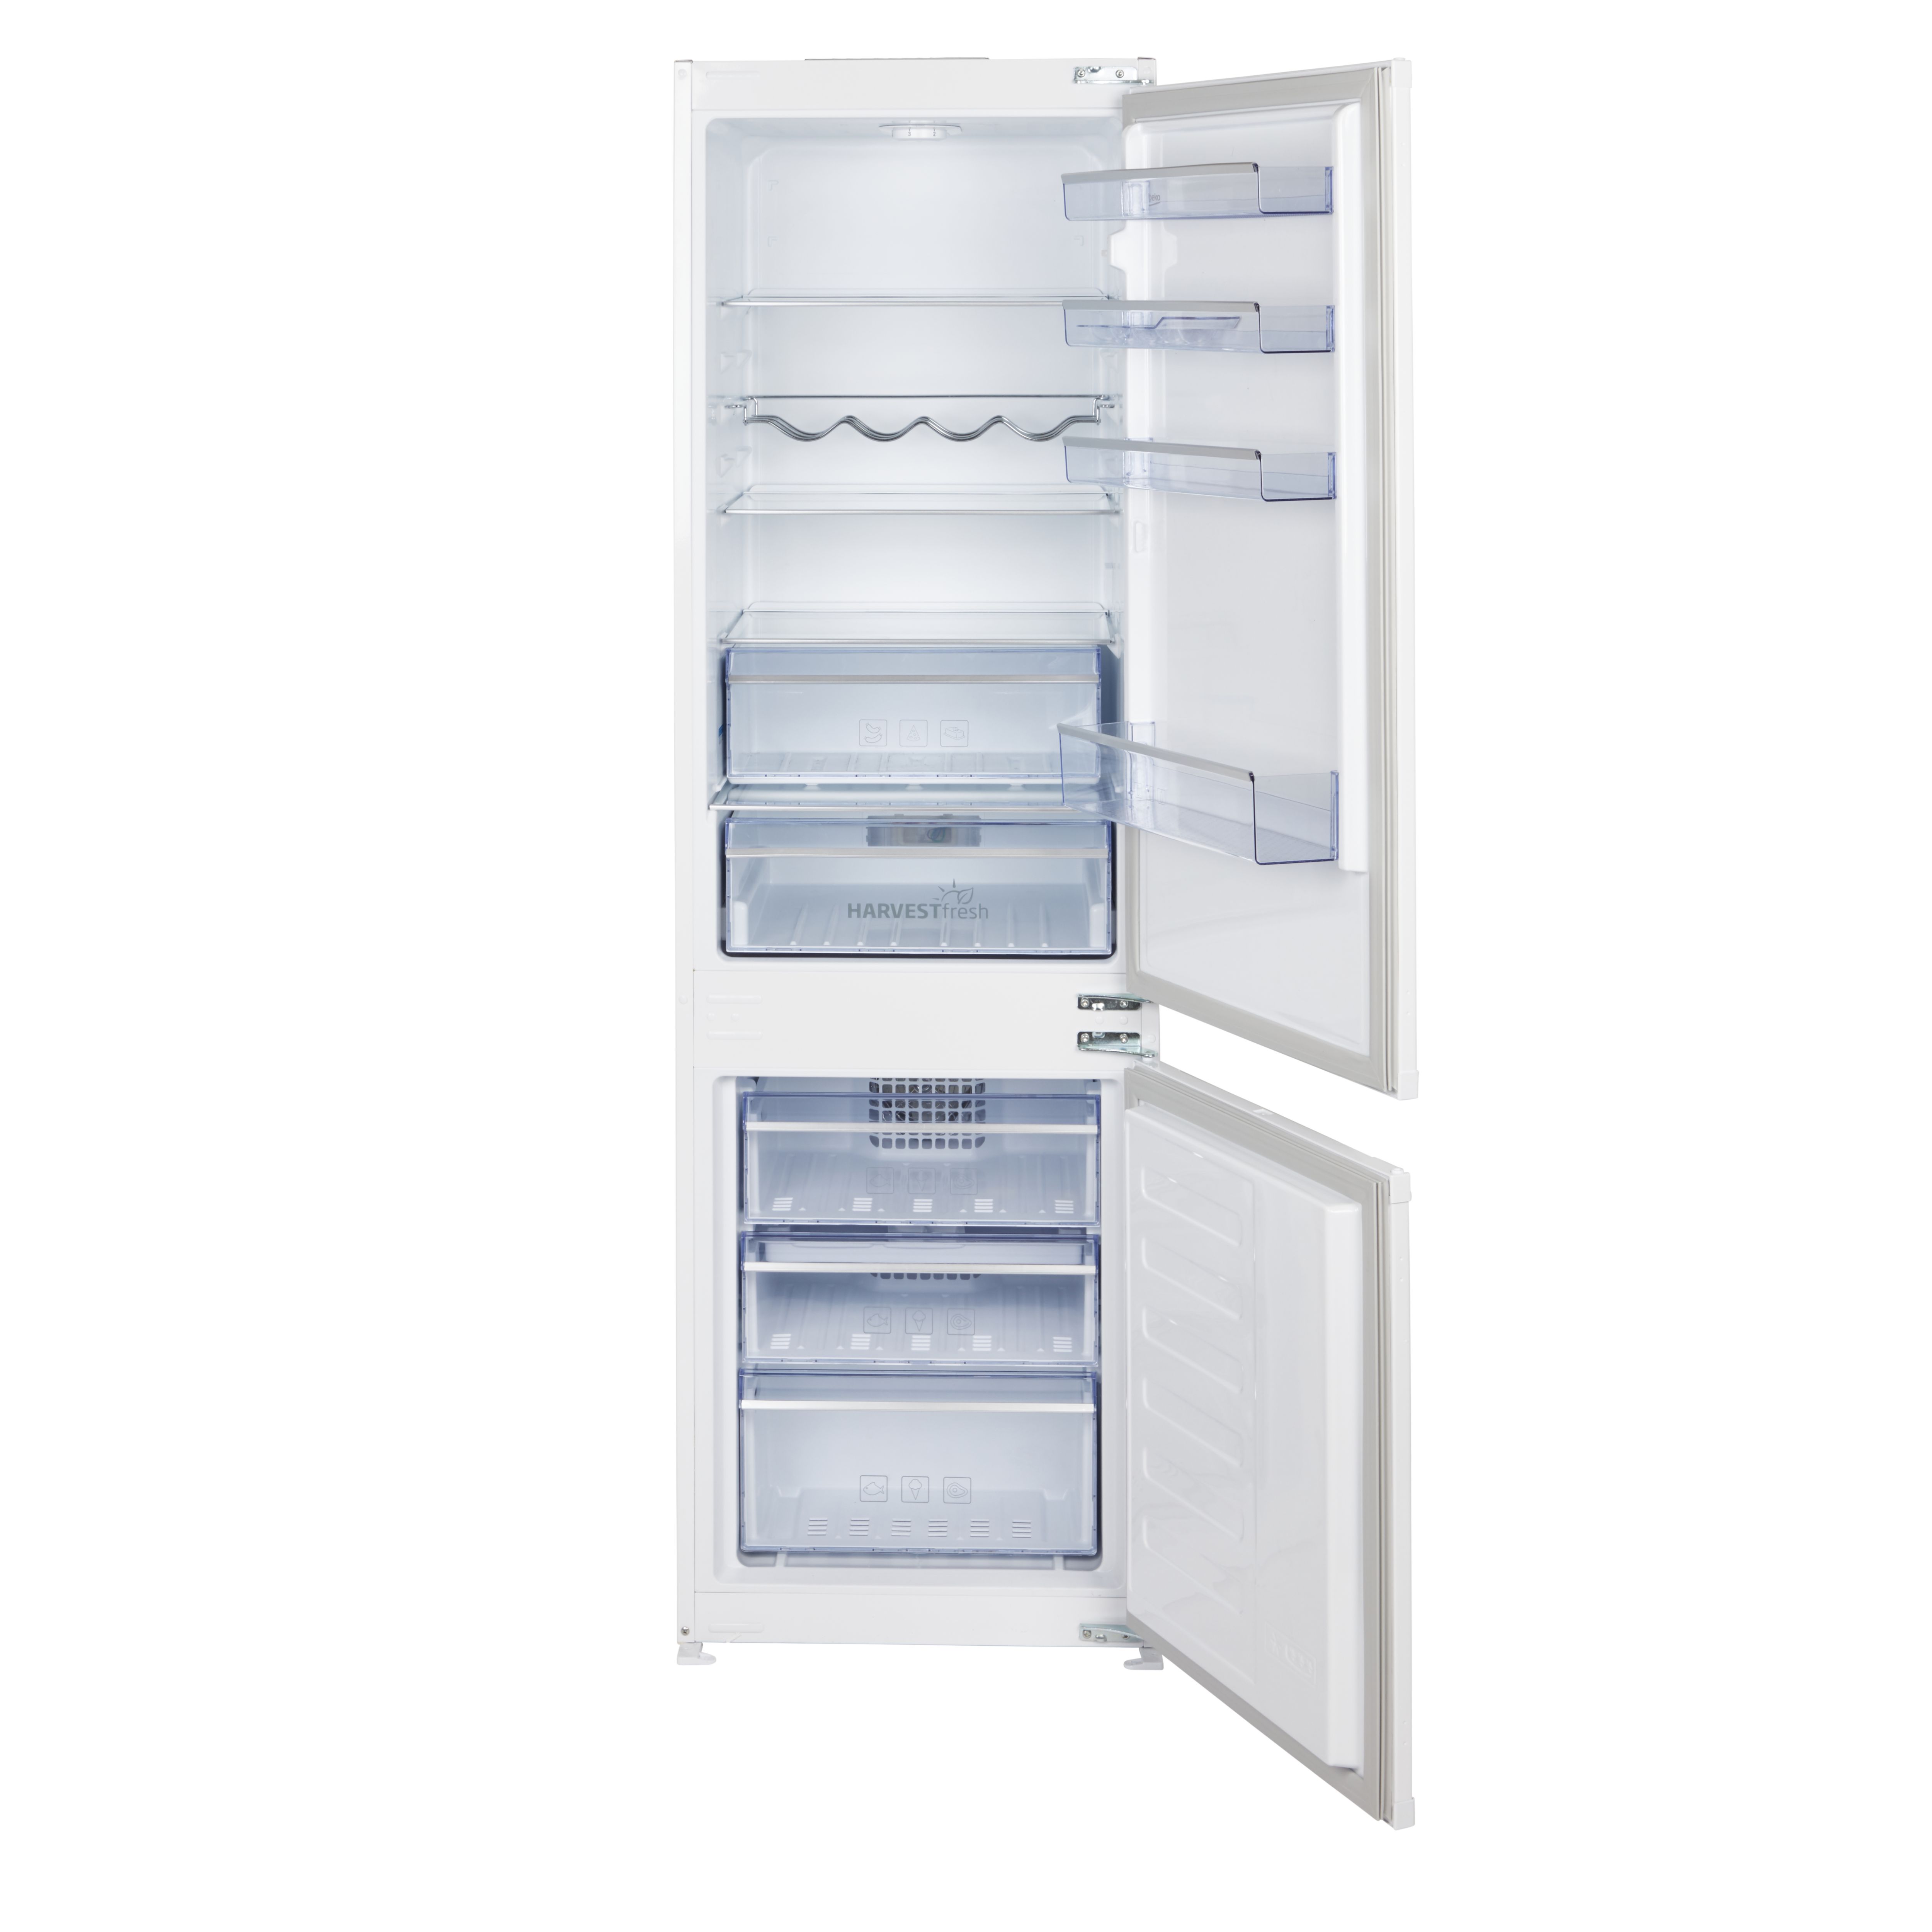 Beko ICQFVD373 70:30 Integrated Frost free Fridge freezer - White